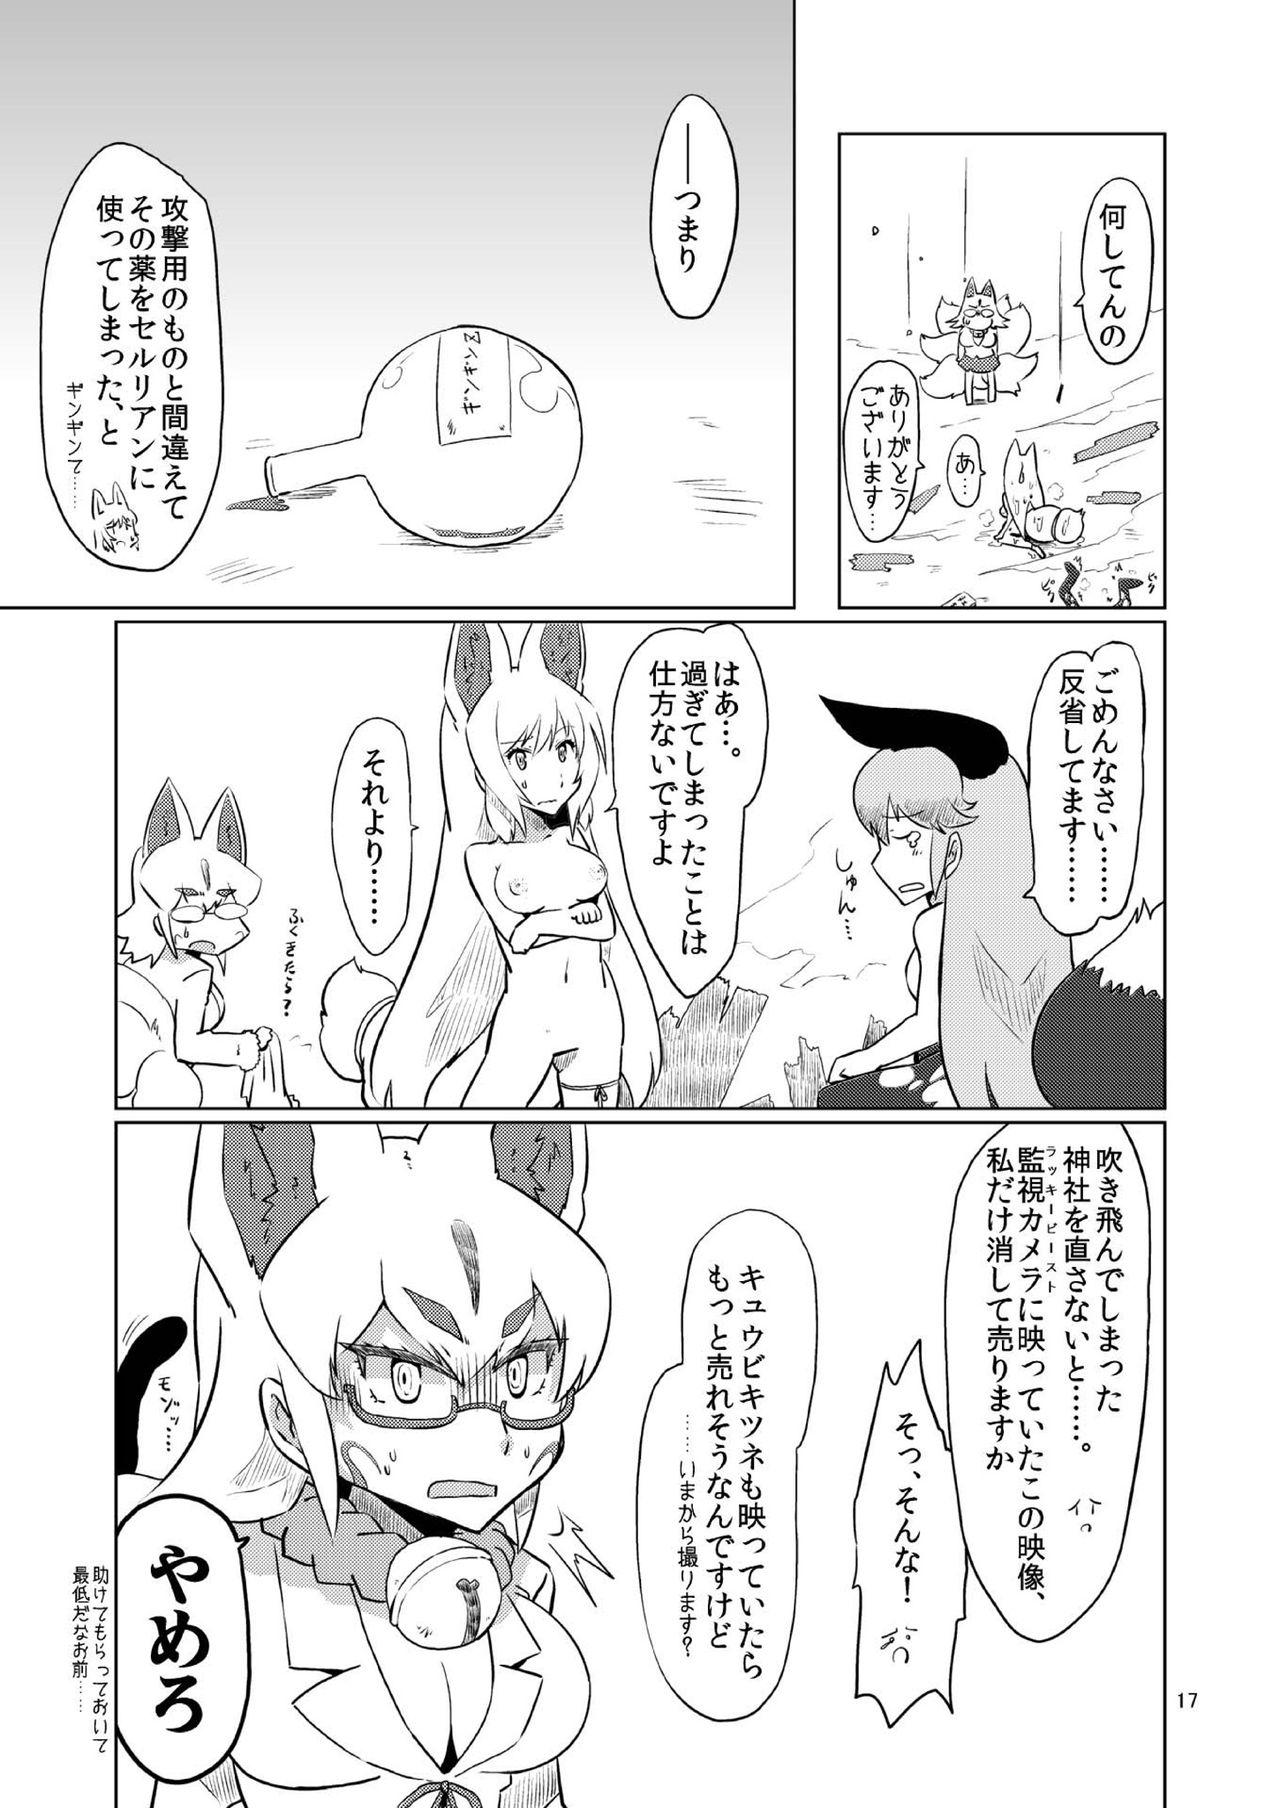 Culote Oinarisama vs Shokushu - Kemono friends Oil - Page 17